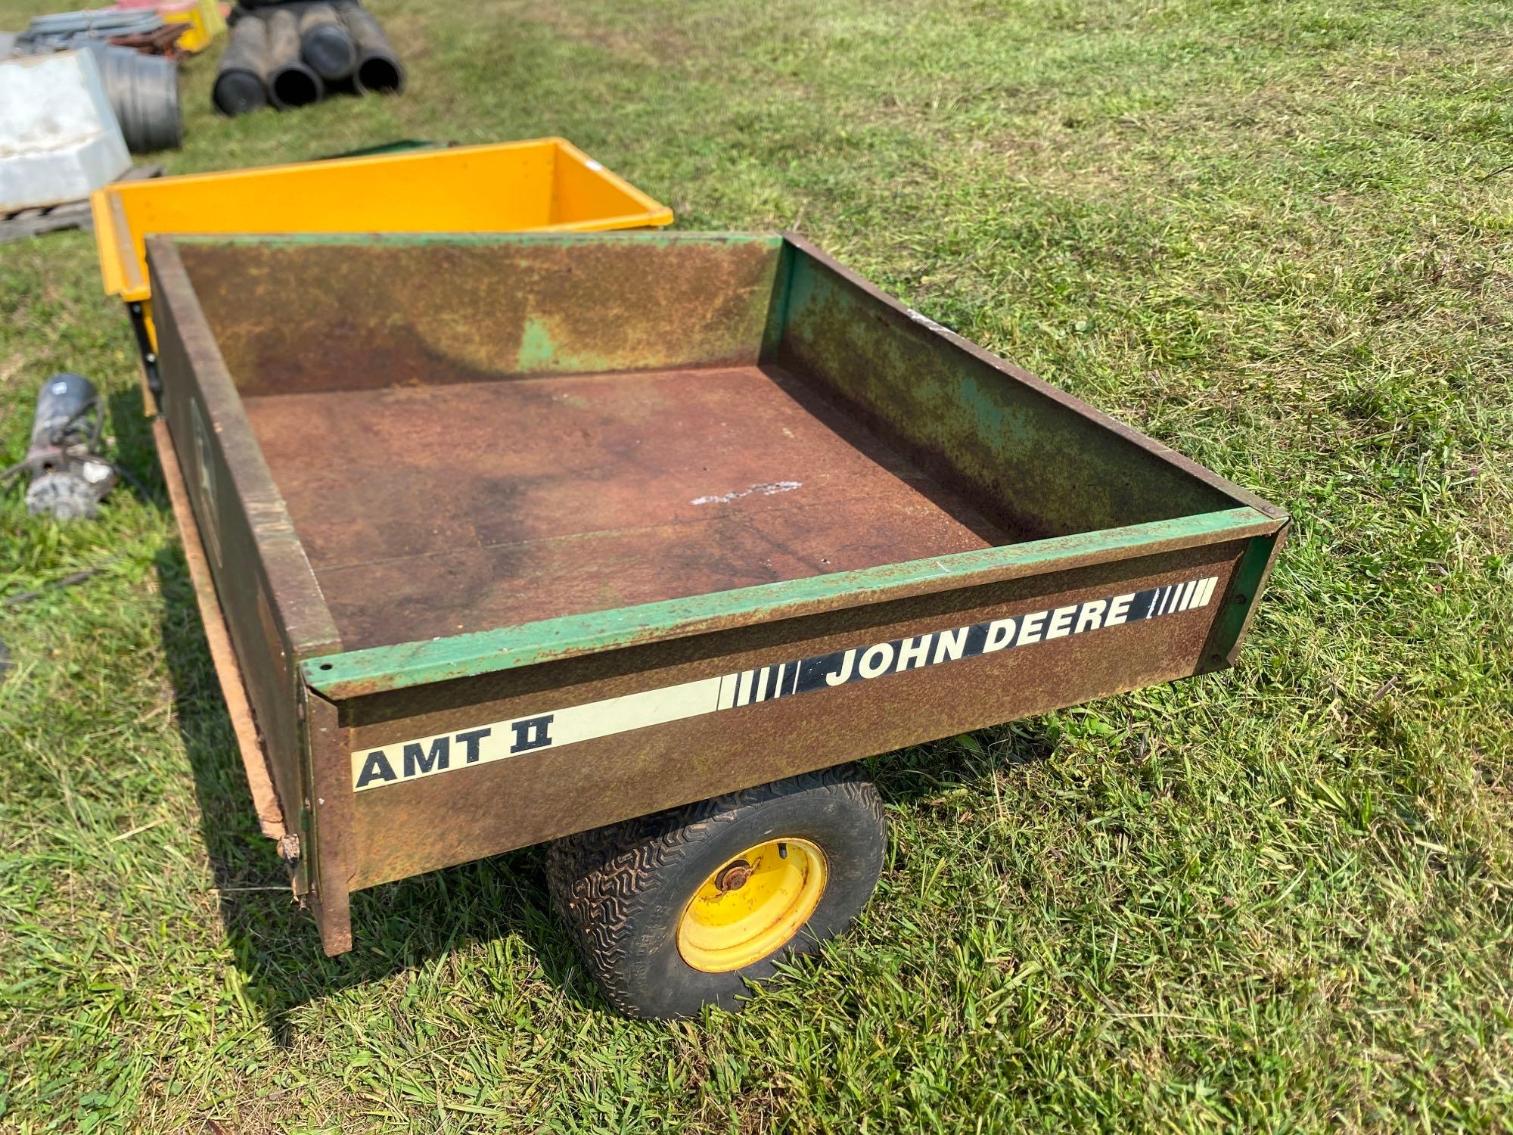 Image for John Deere AMTII Yard Cart